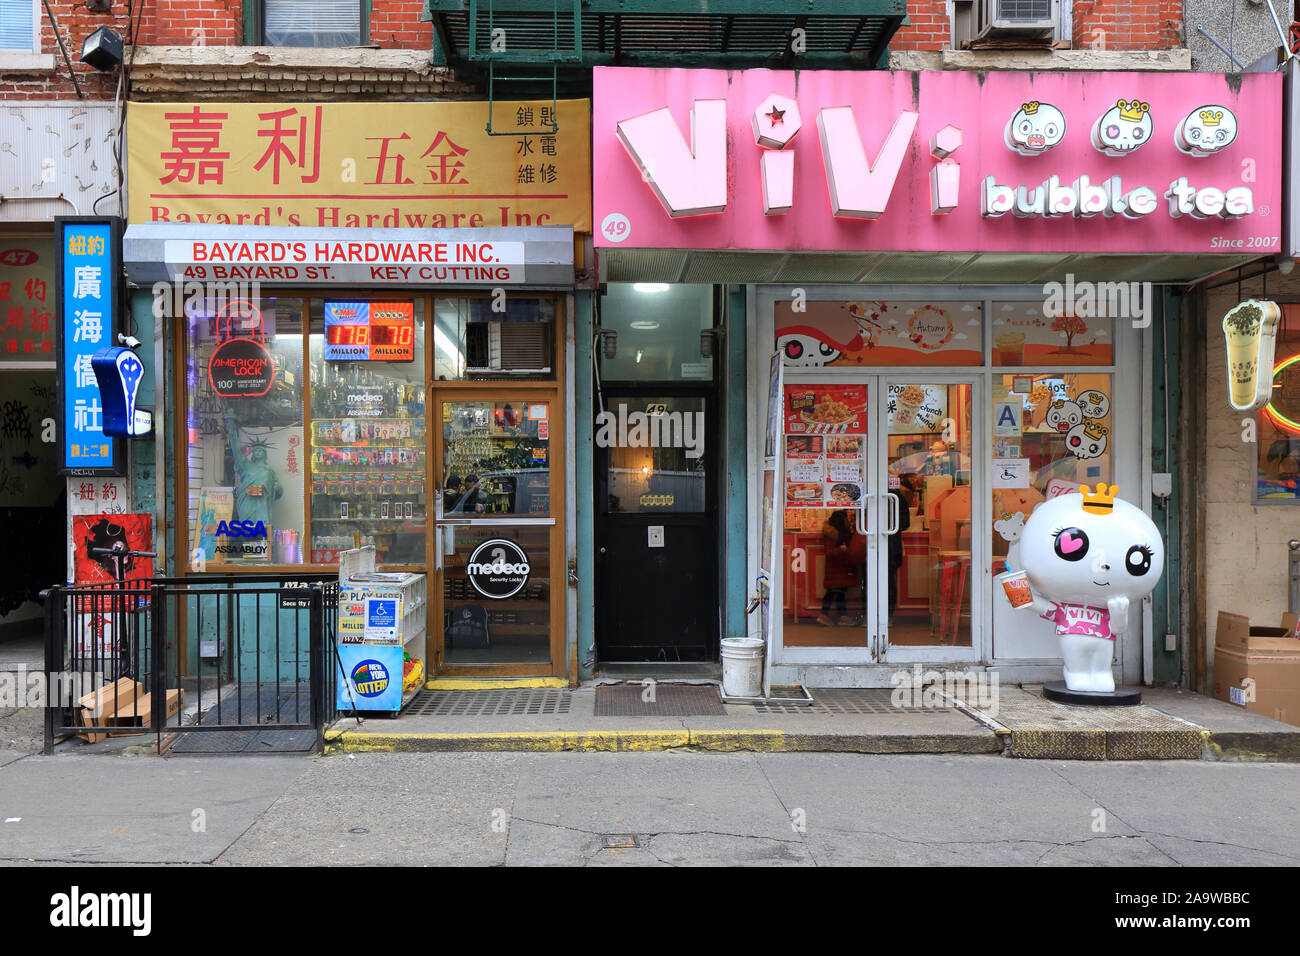 Bayard's Hardware, Vivi Bubble Tea, 49 Bayard Street, New York, NY. exterior storefronts of local businesses in Manhattan Chinatown Stock Photo